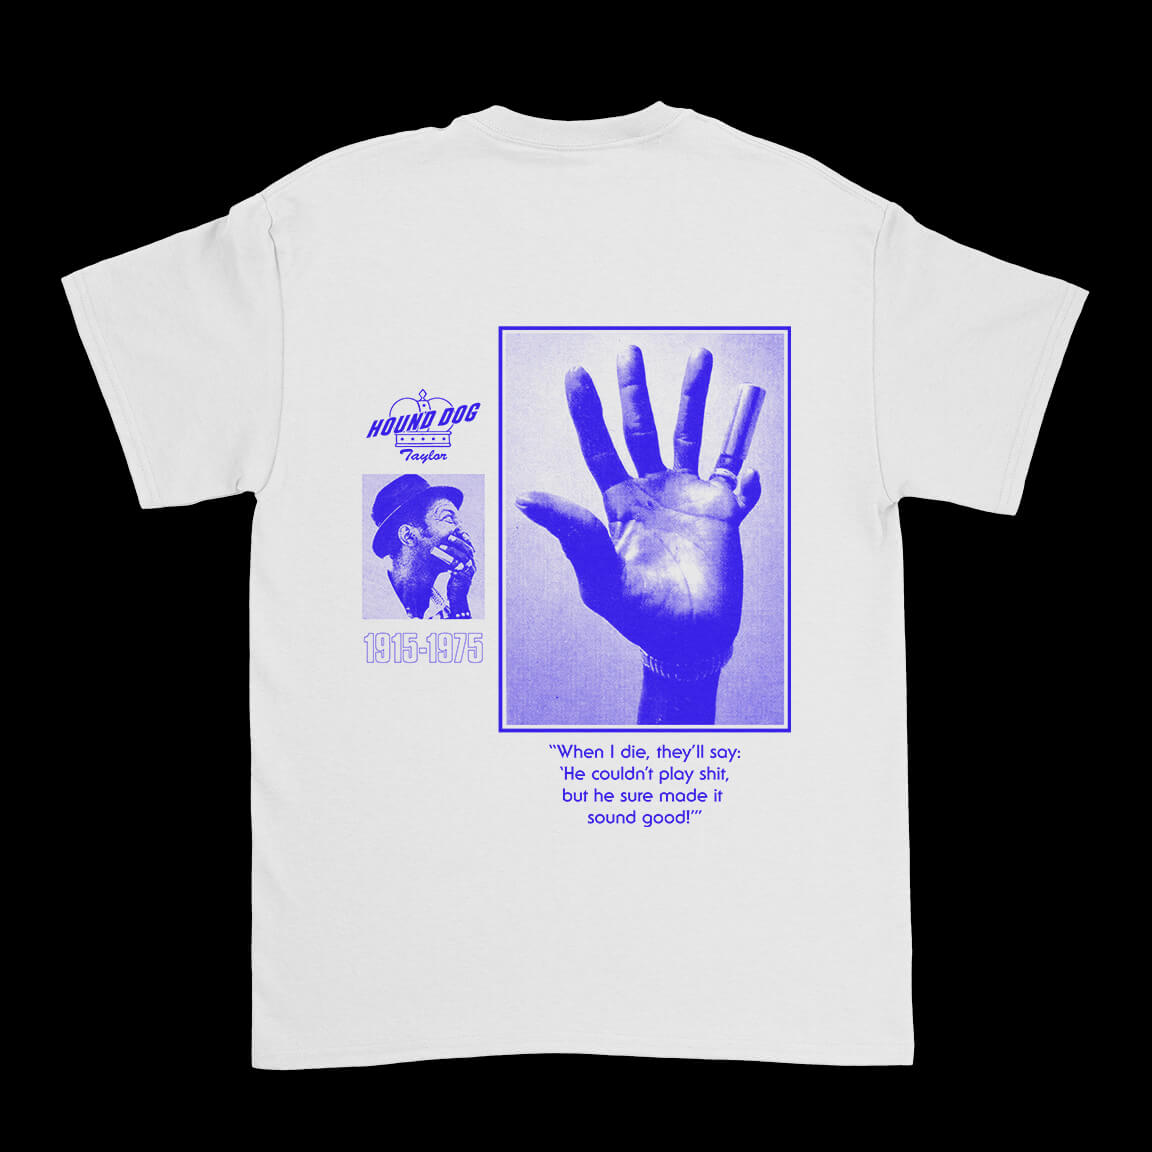 Hound Dog Taylor bootleg T-shirt by Jackson Green